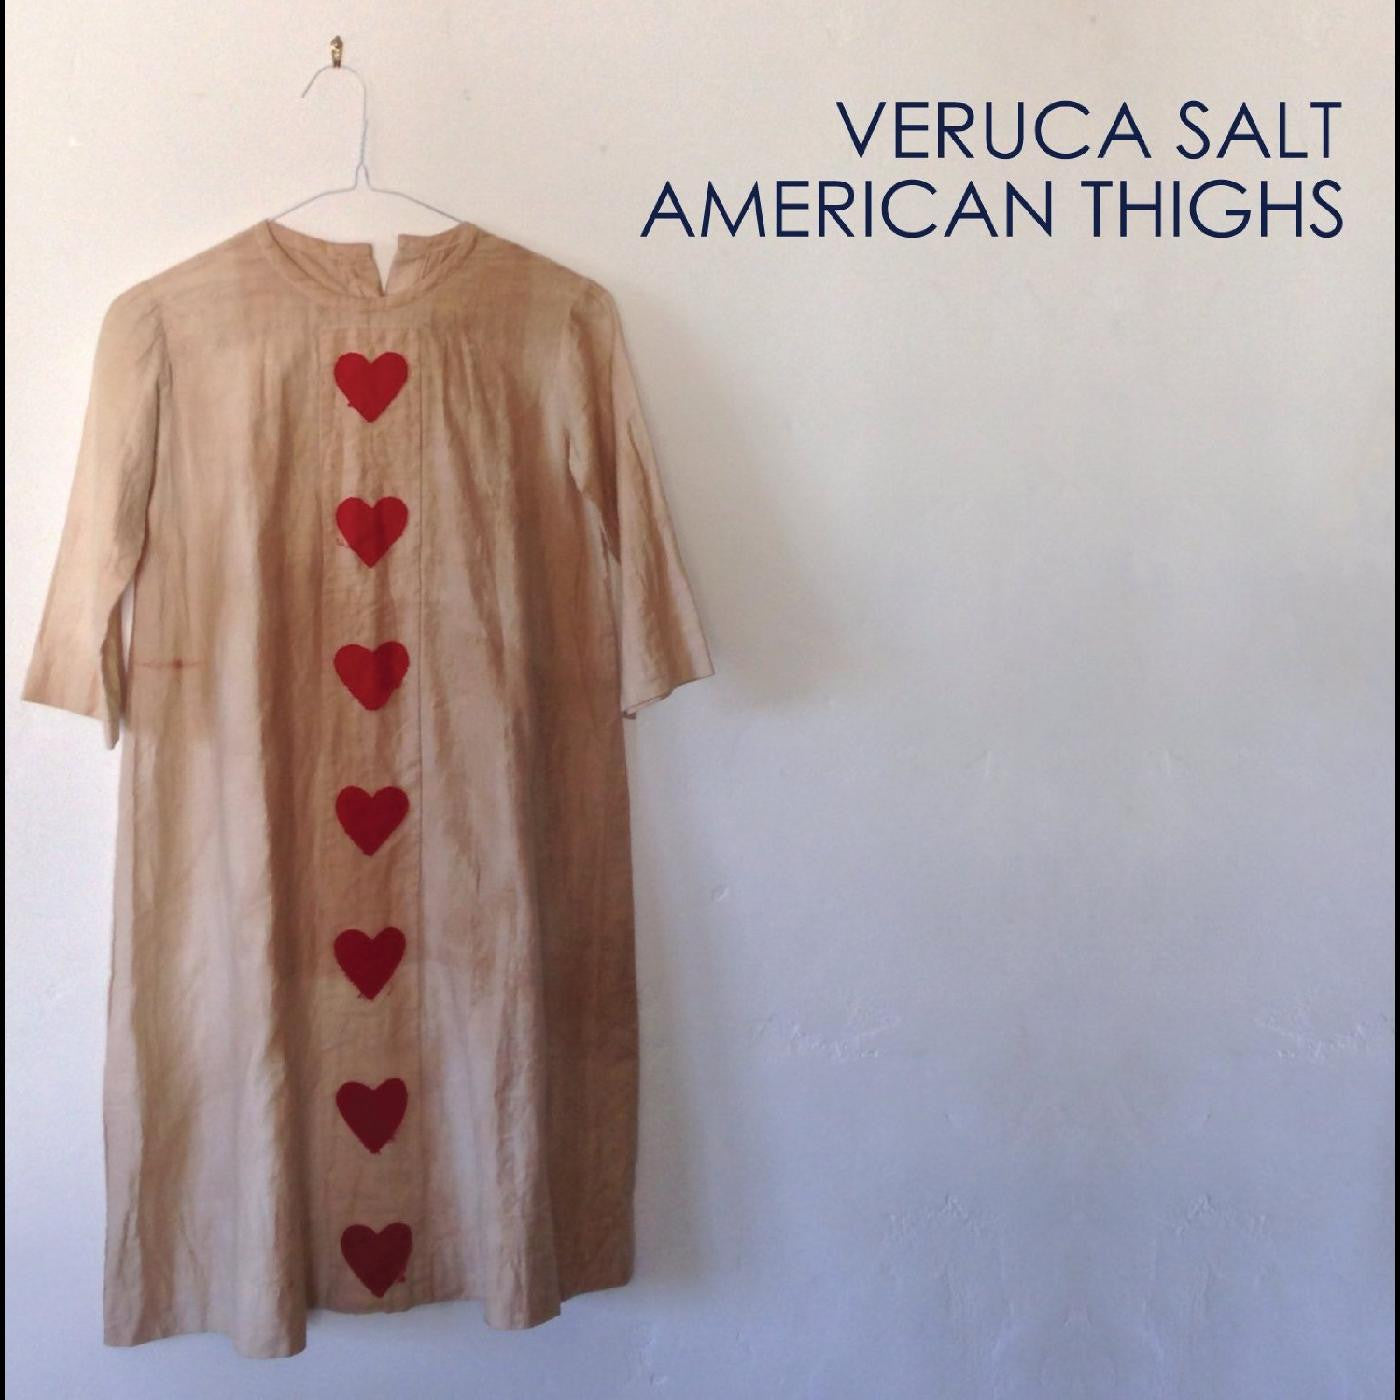 Veruca Salt - American Thighs (Vinyl LP)